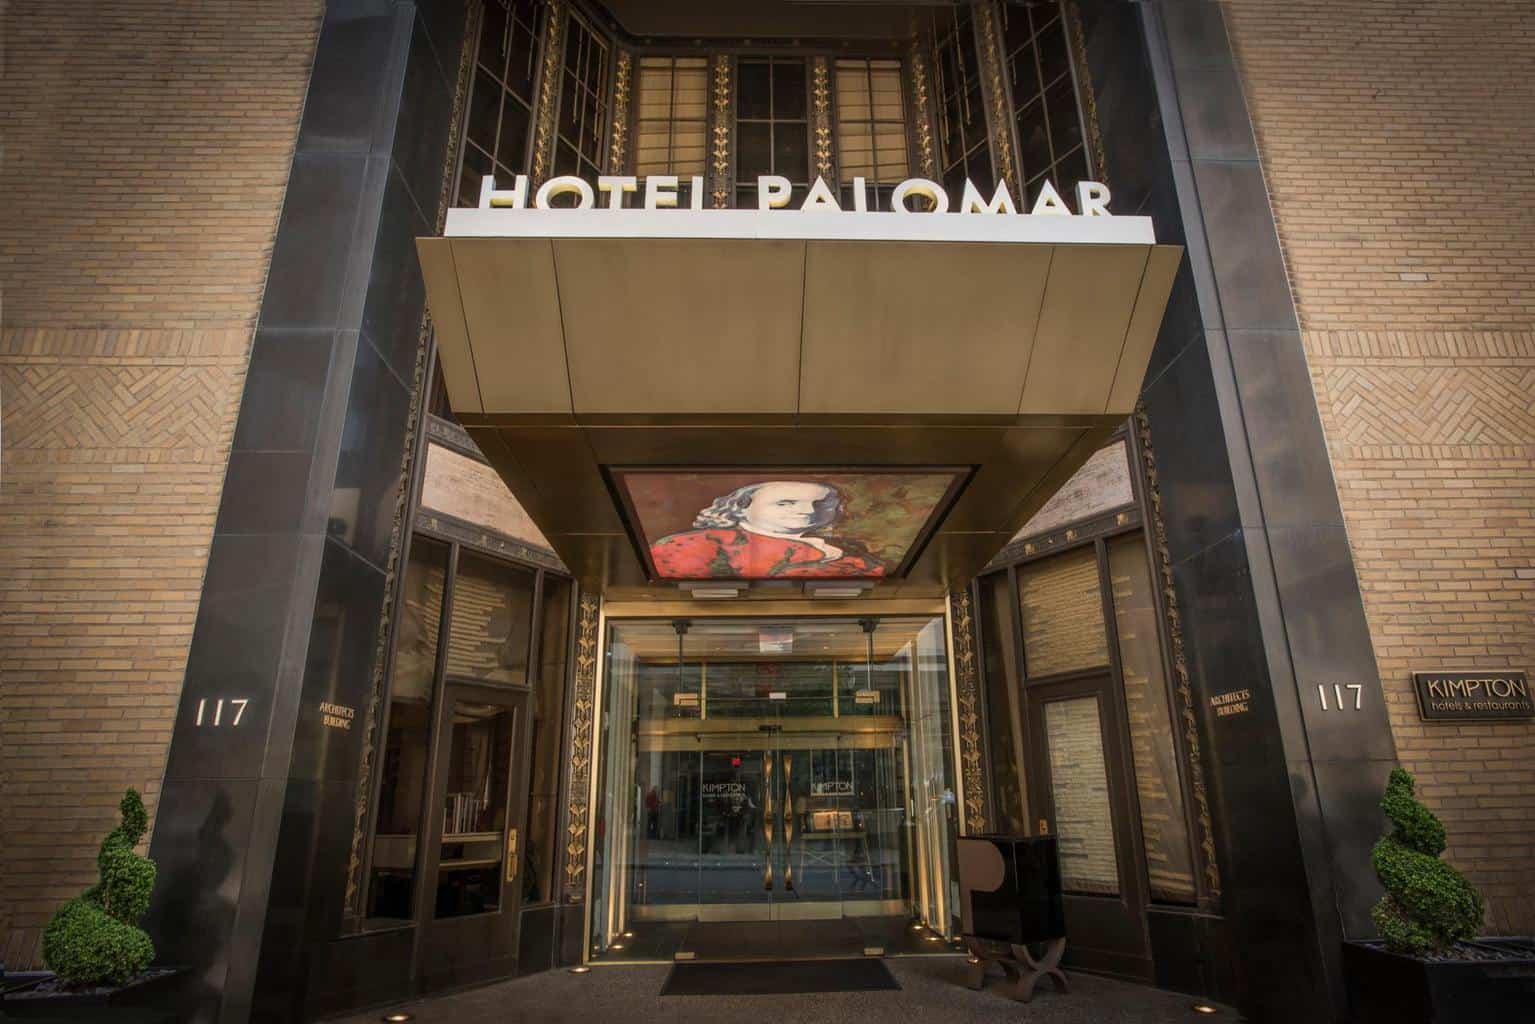 Hotel Palomar Filadelfia Pennsylvania